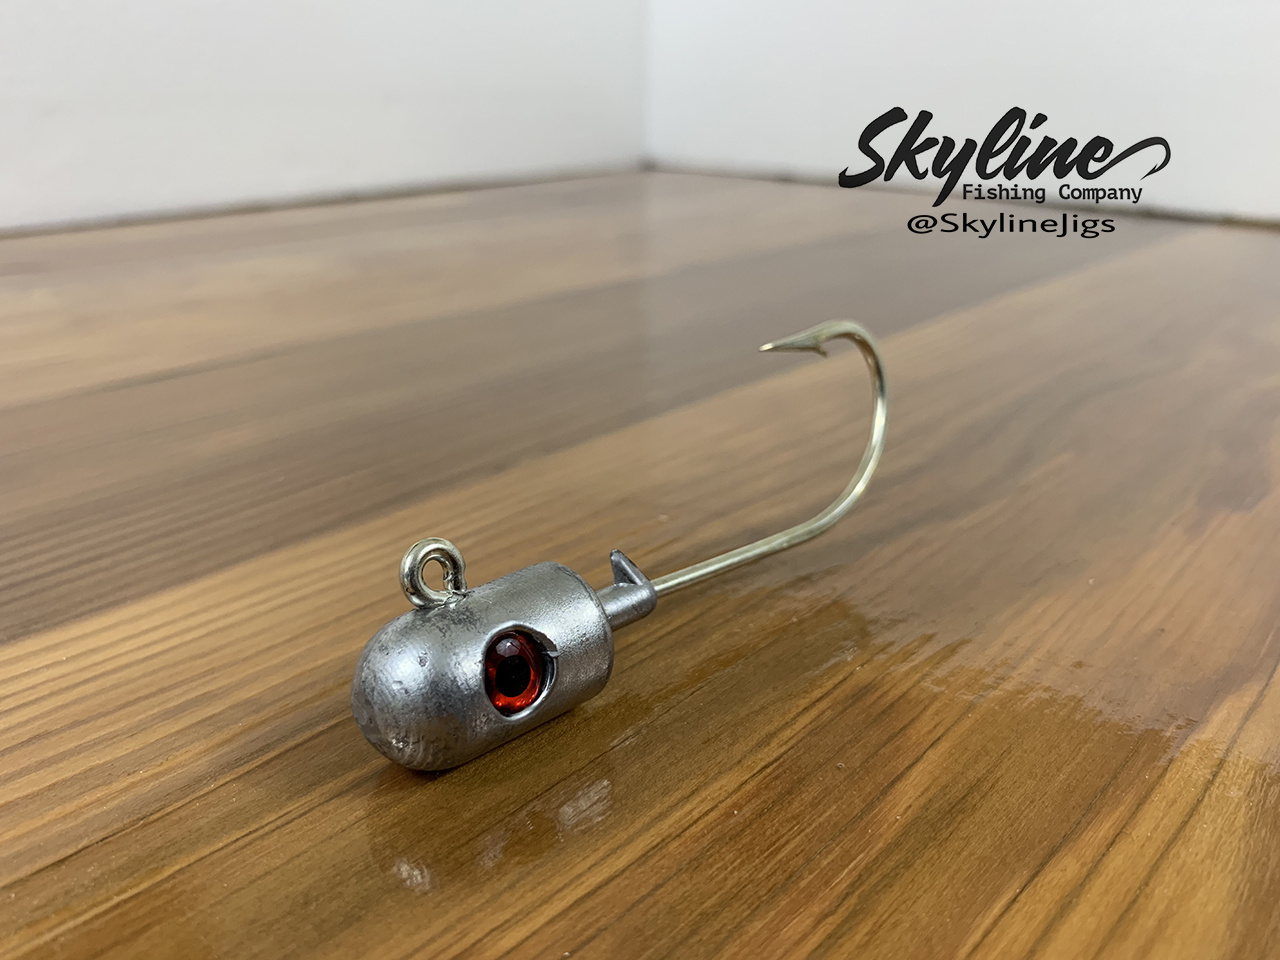 Skyline Bullet Round Jig Heads - Skyline Fishing Company